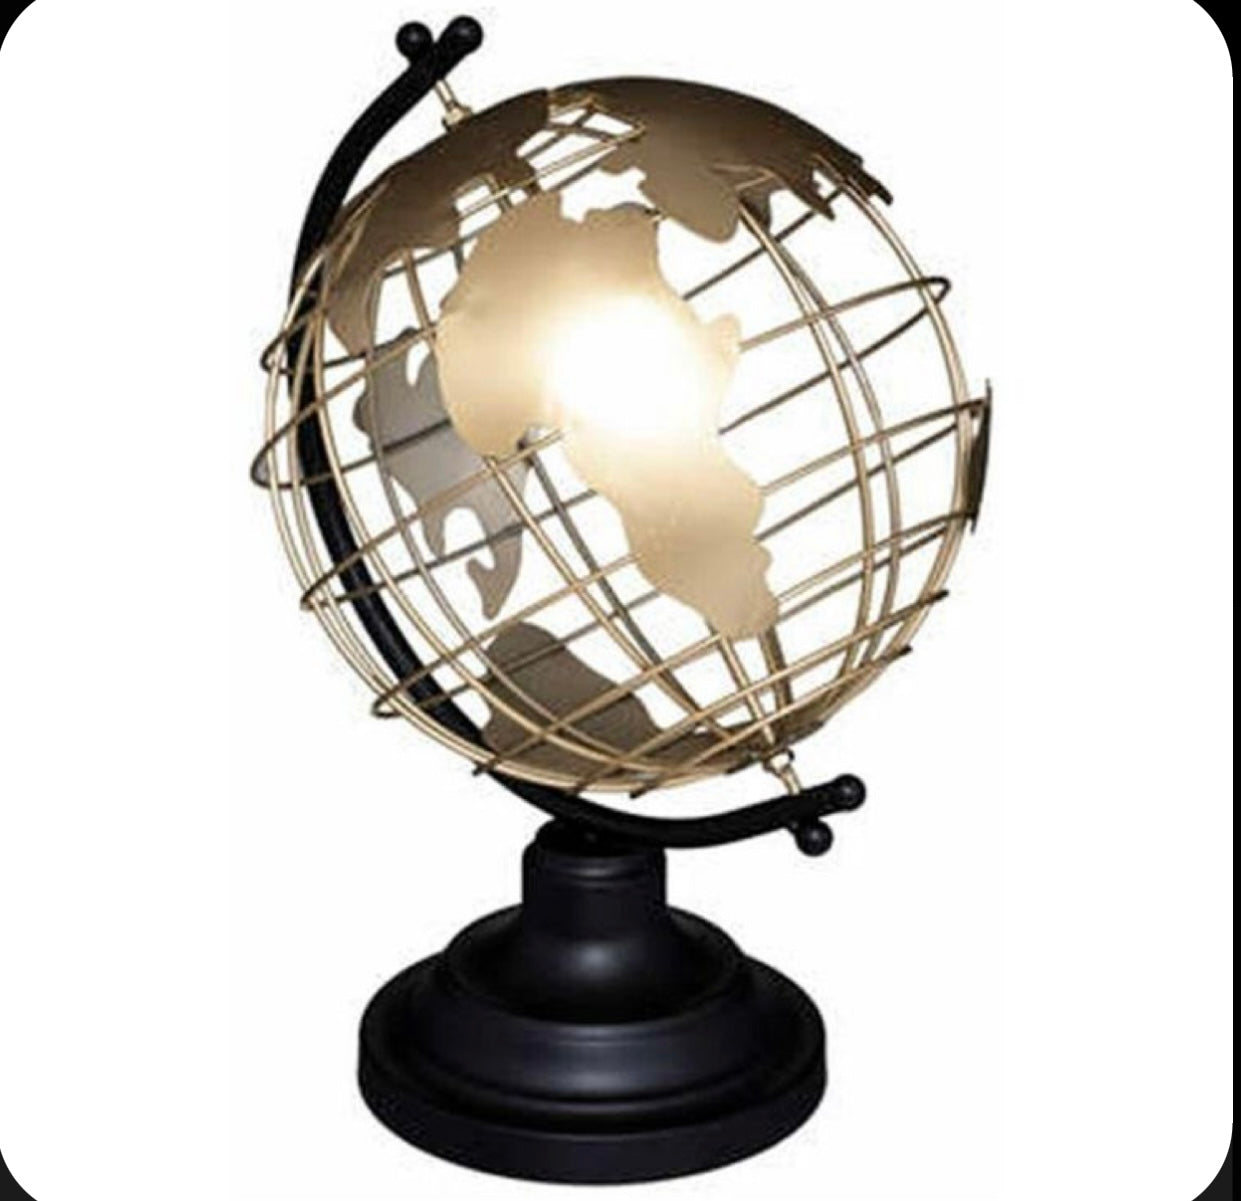 Metallic and plastic globe